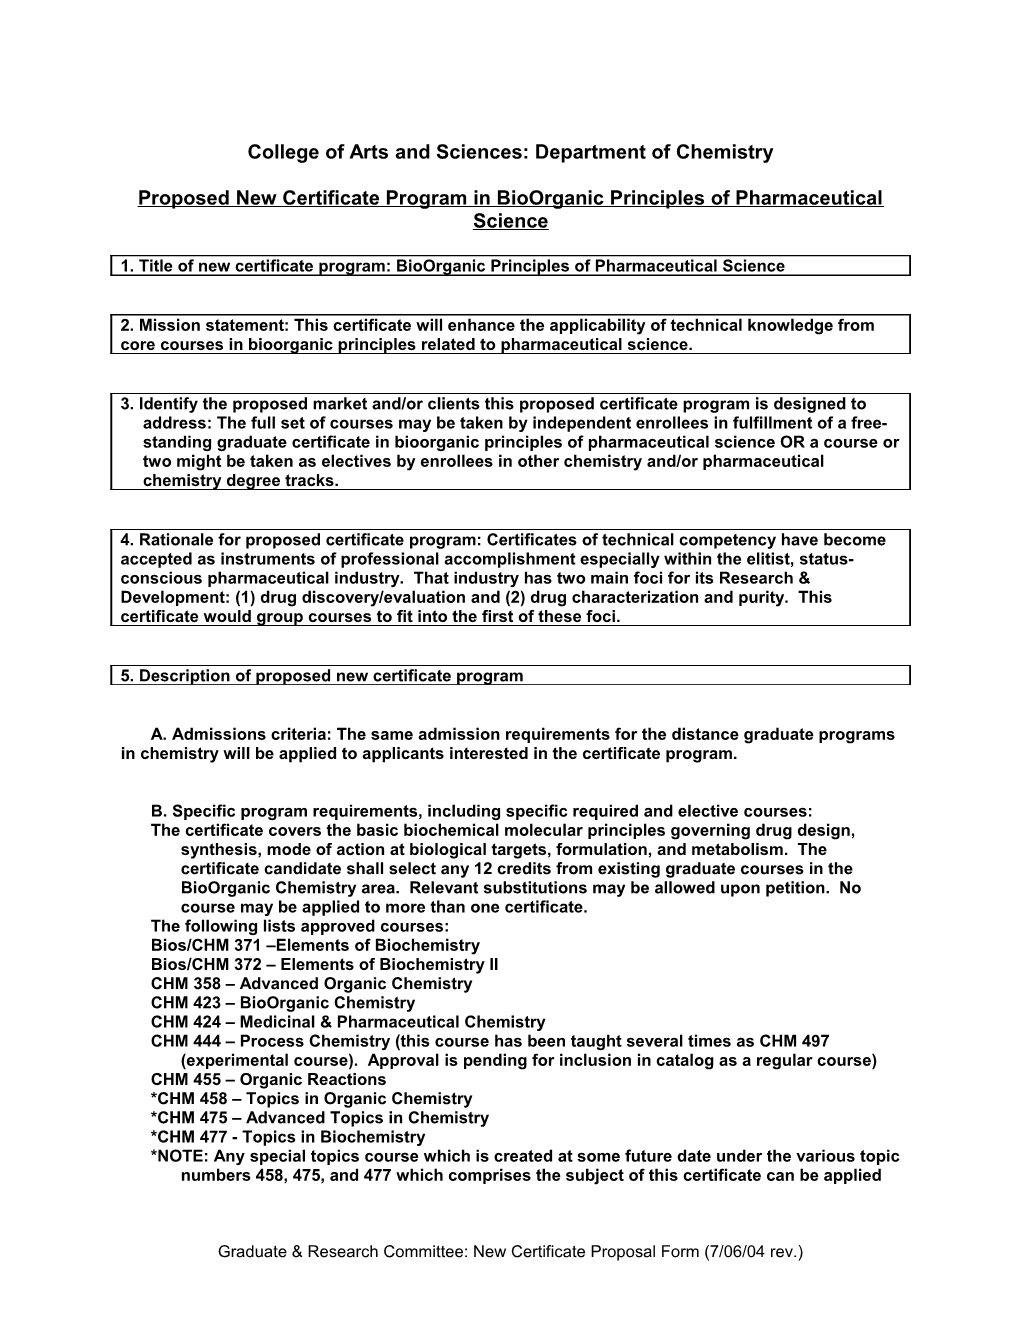 GRC New Certificate Program Proposal Form s1